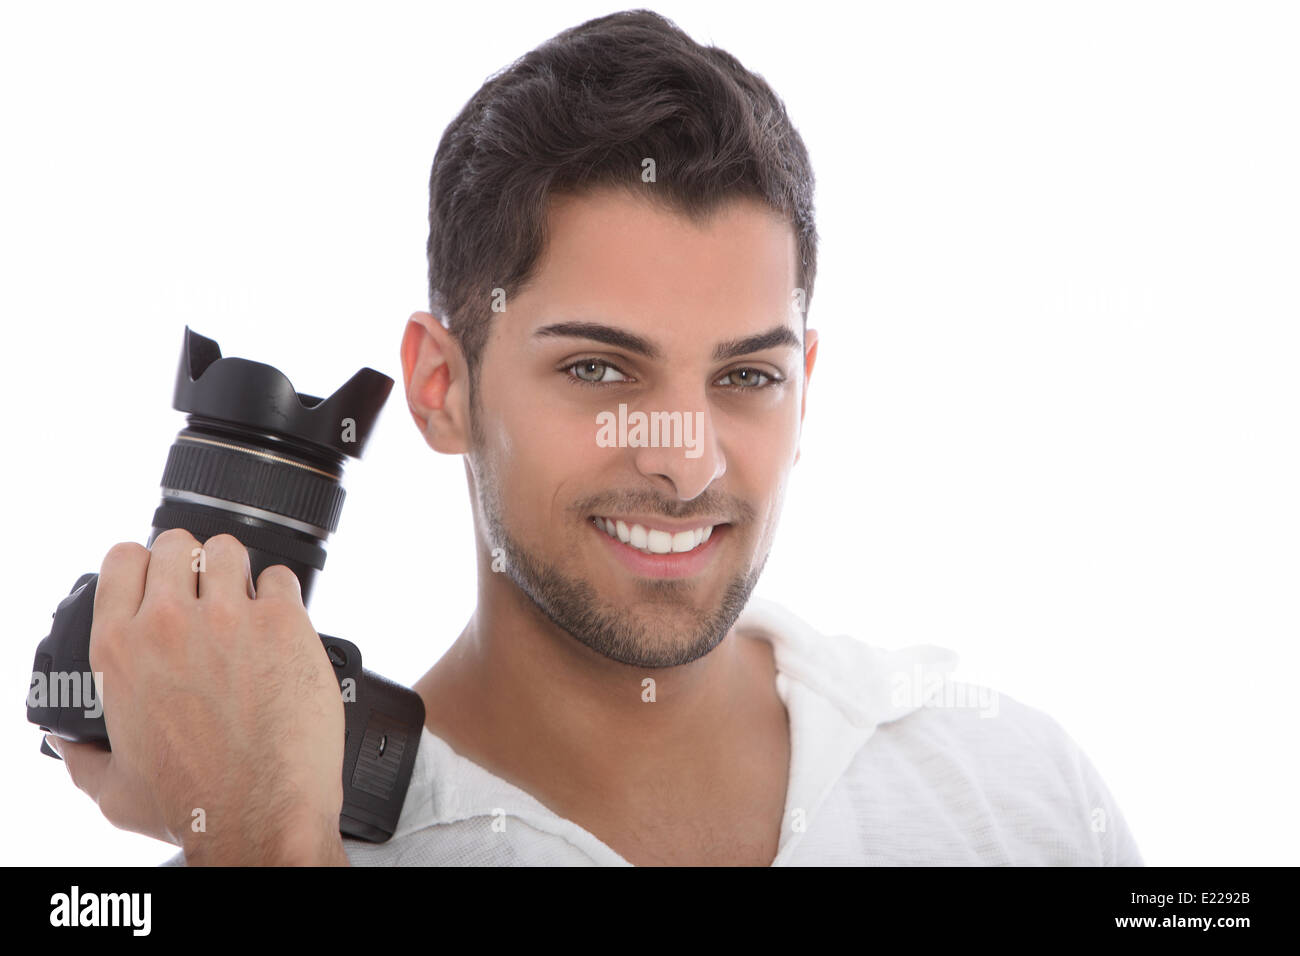 Handsome man holding a dslr camera Stock Photo